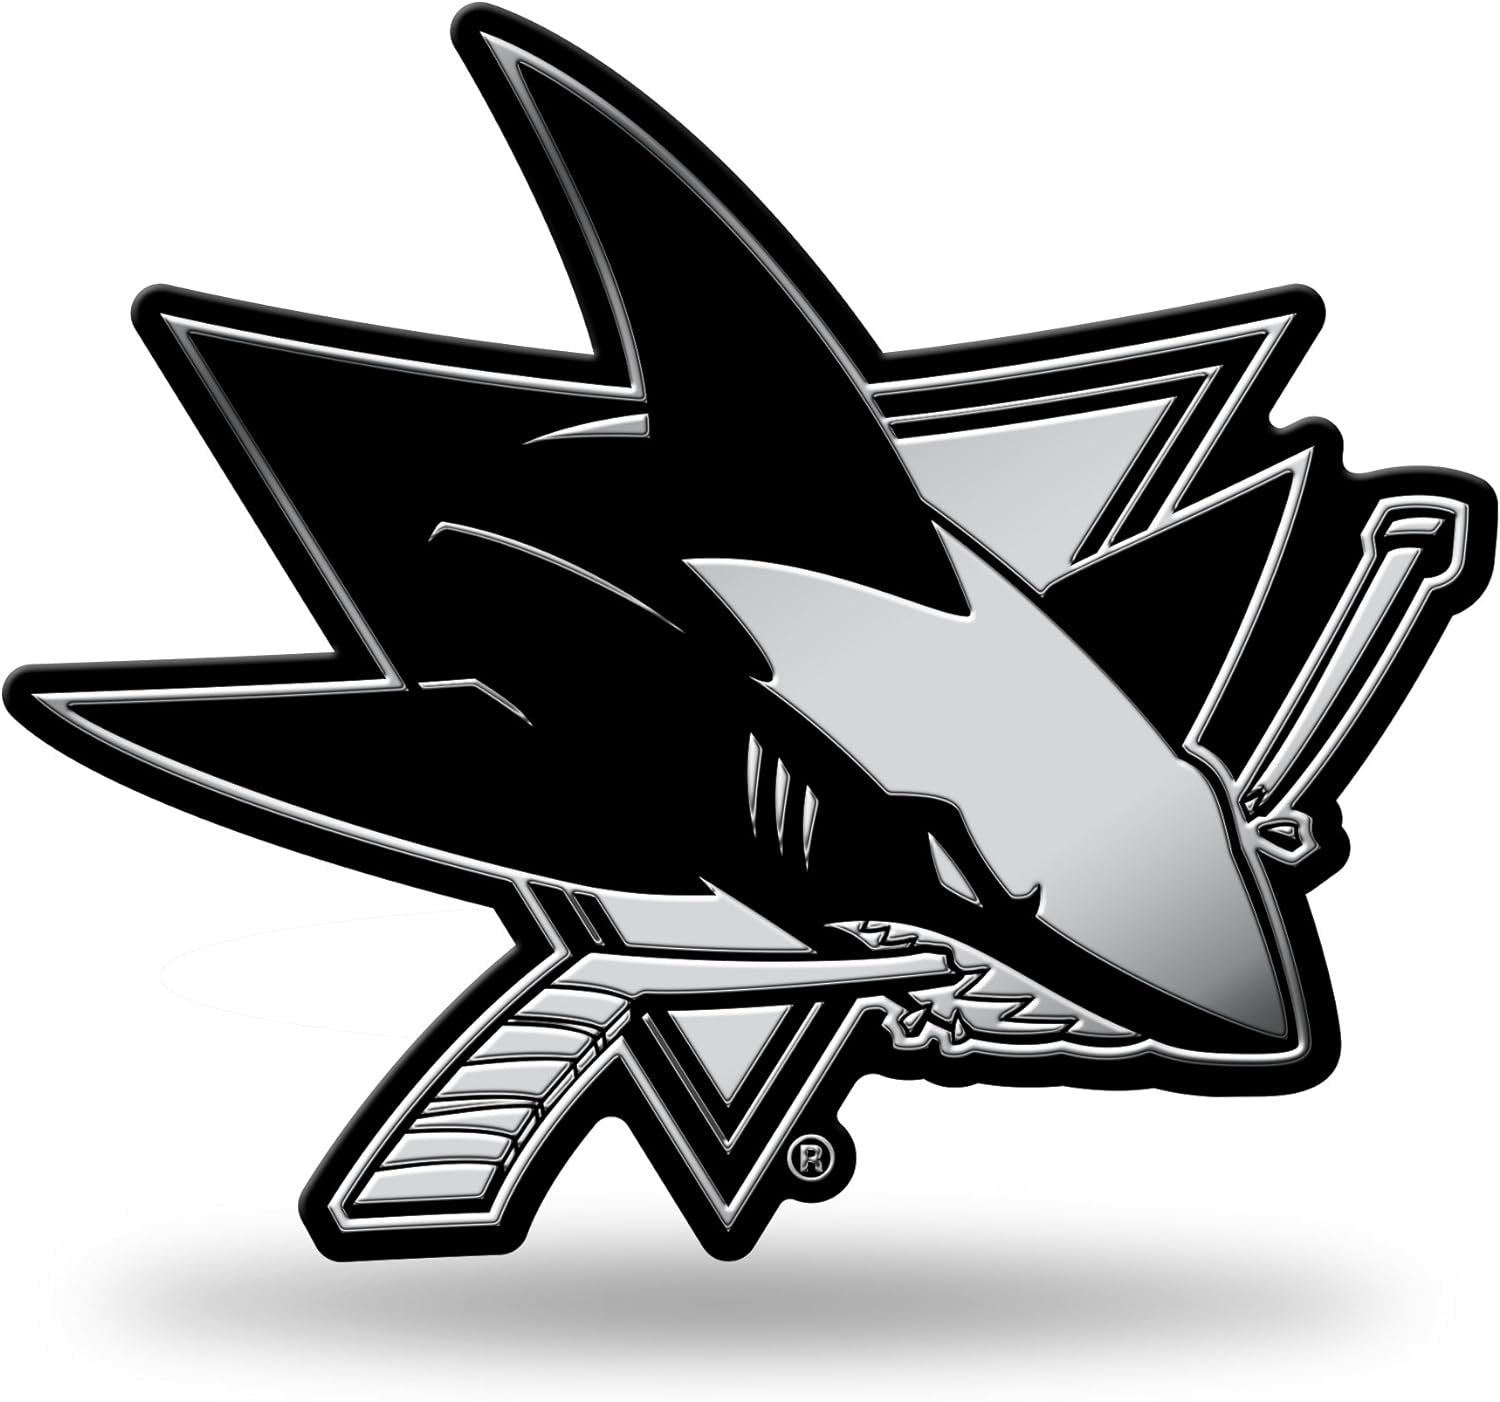 San Jose Sharks Auto Emblem, Silver Chrome Color, Raised Molded Plastic, 3.5 Inch, Adhesive Tape Backing